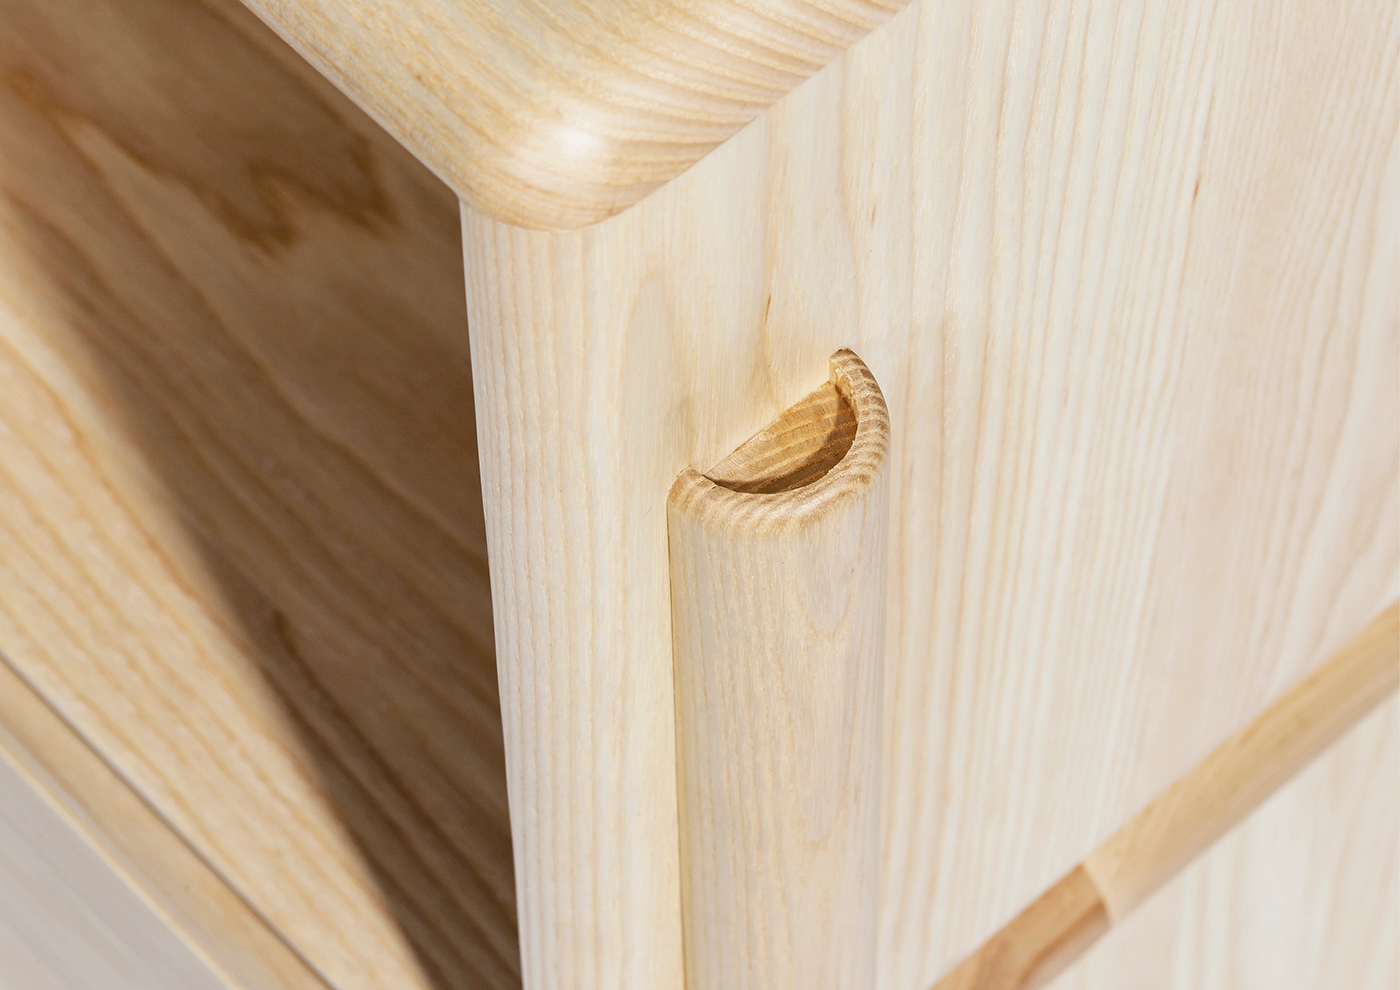 furniture design  industrial design  cabinet minimalist modular design wood furniture